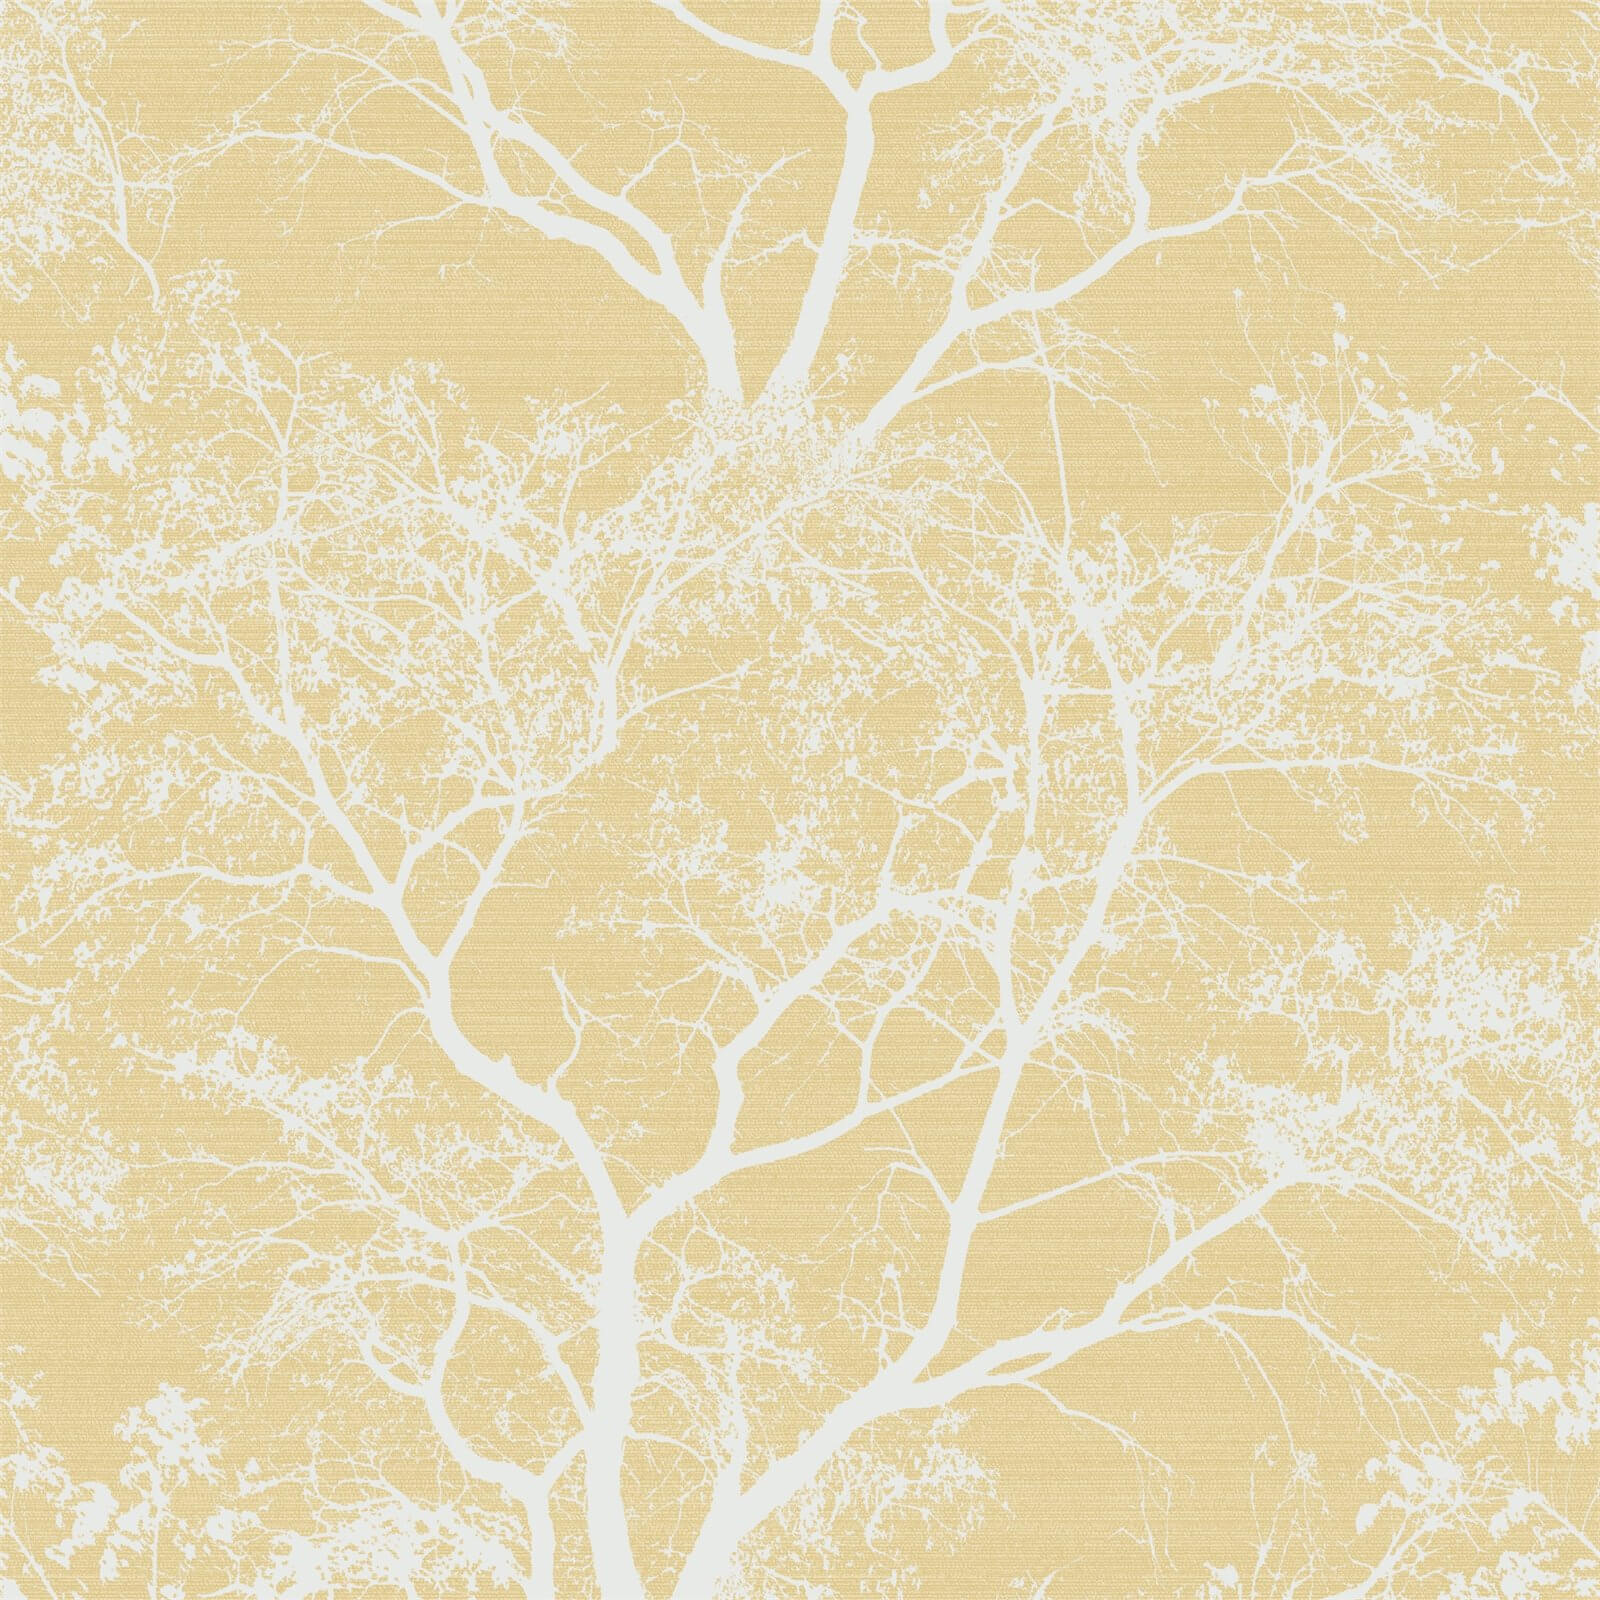 Holden Decor Whispering Trees Textured Metallic Glitter Yellow Wallpaper